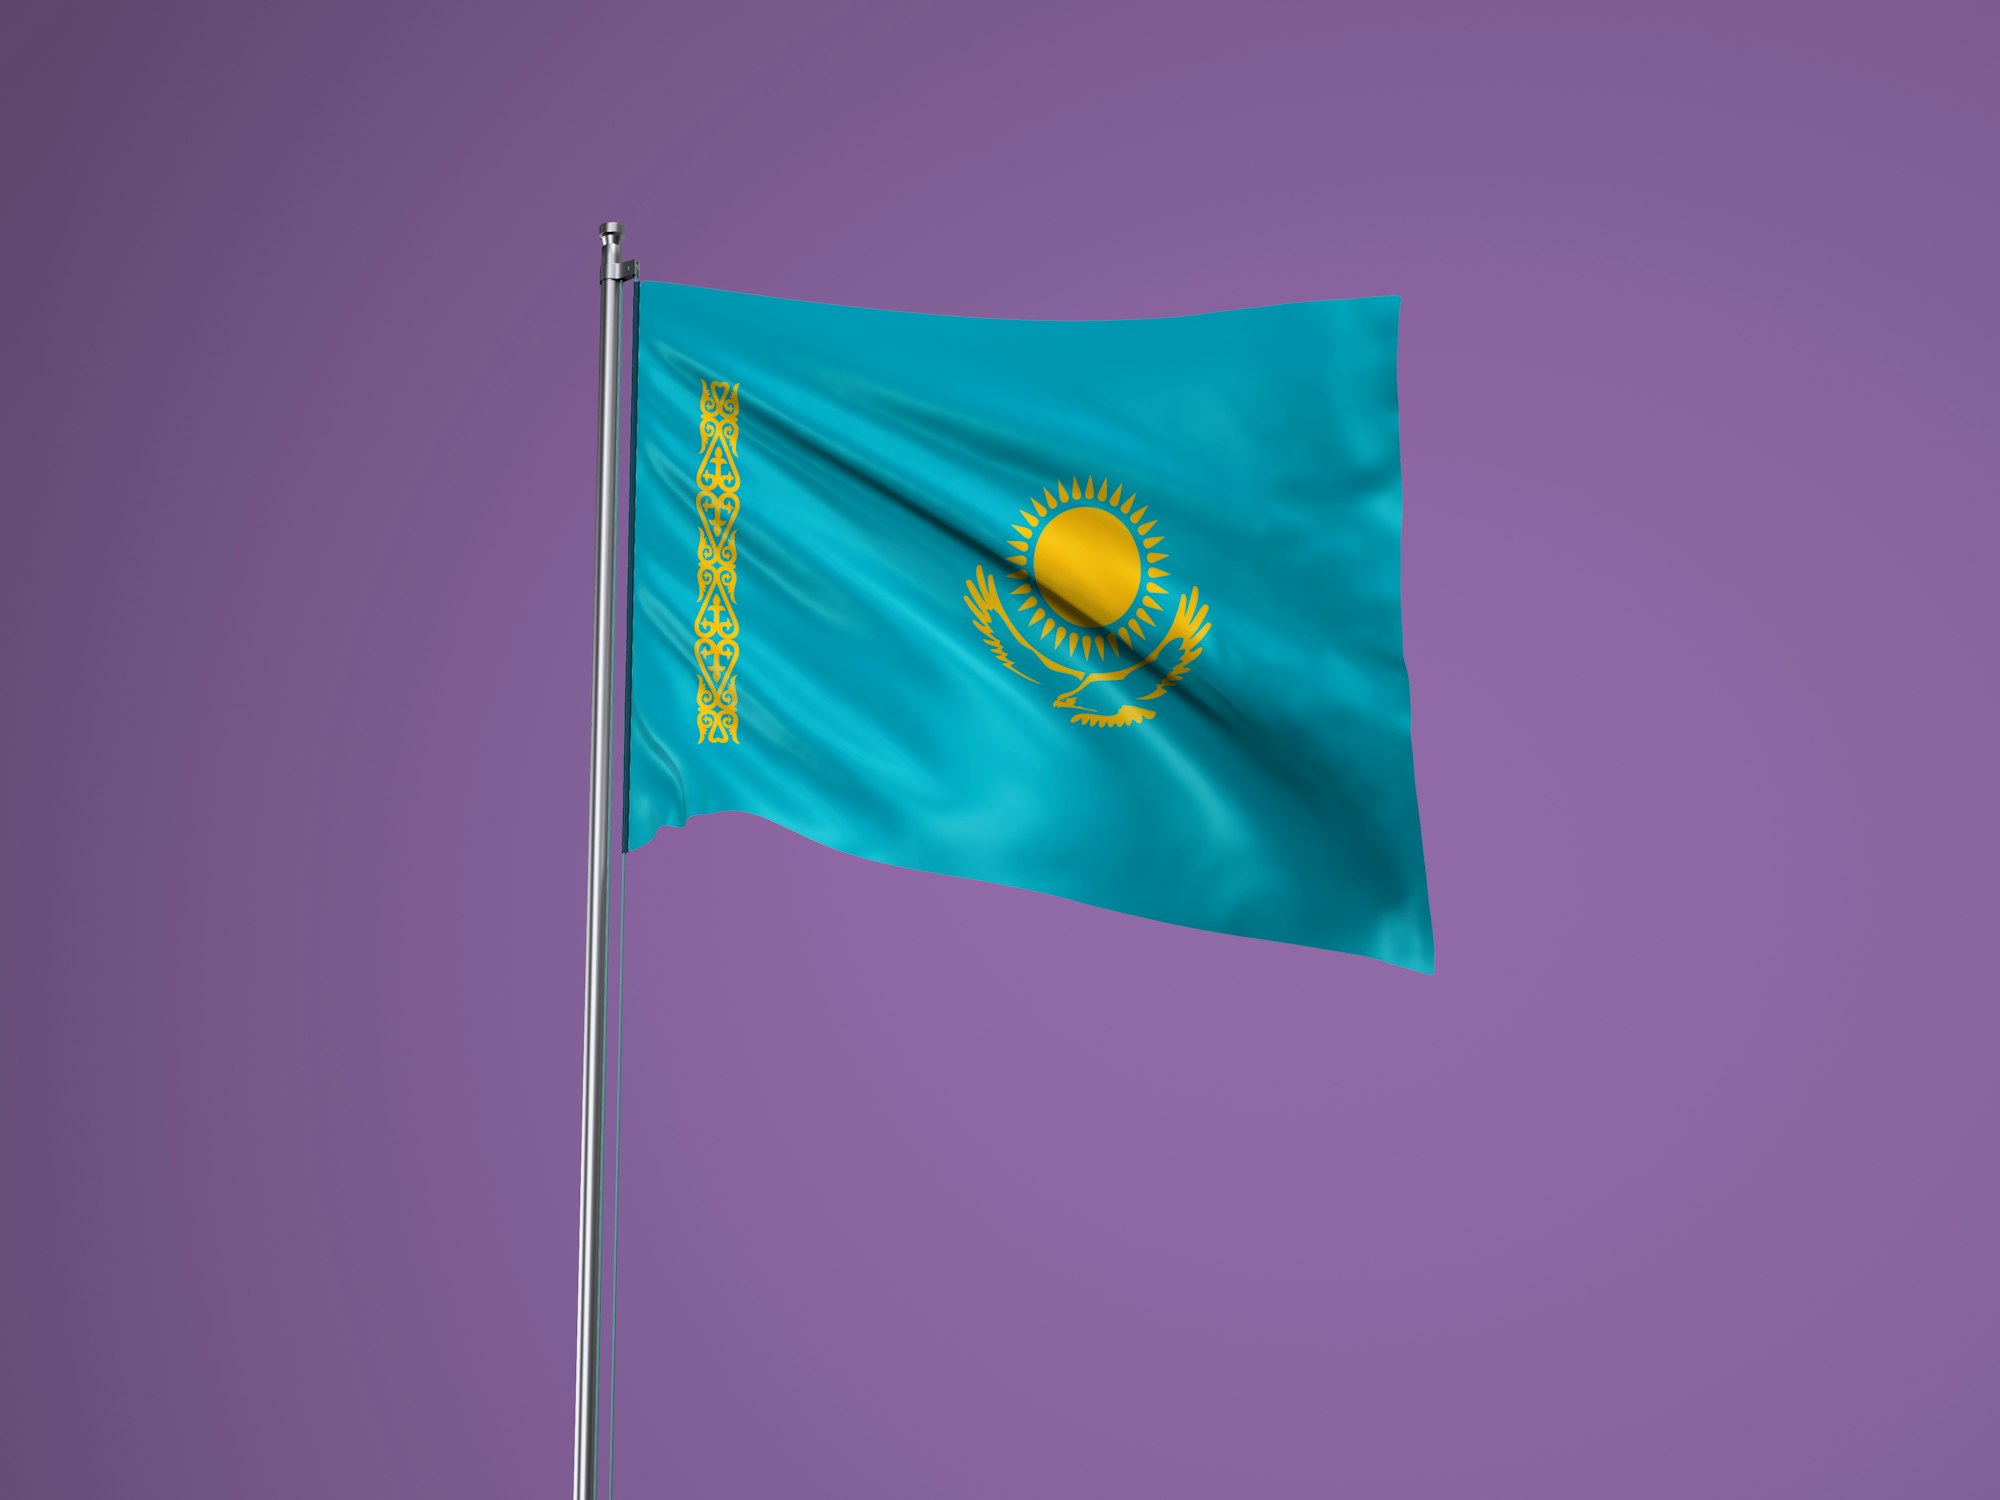 Binance became a partner of the Kazakhstan Ministry of Finance